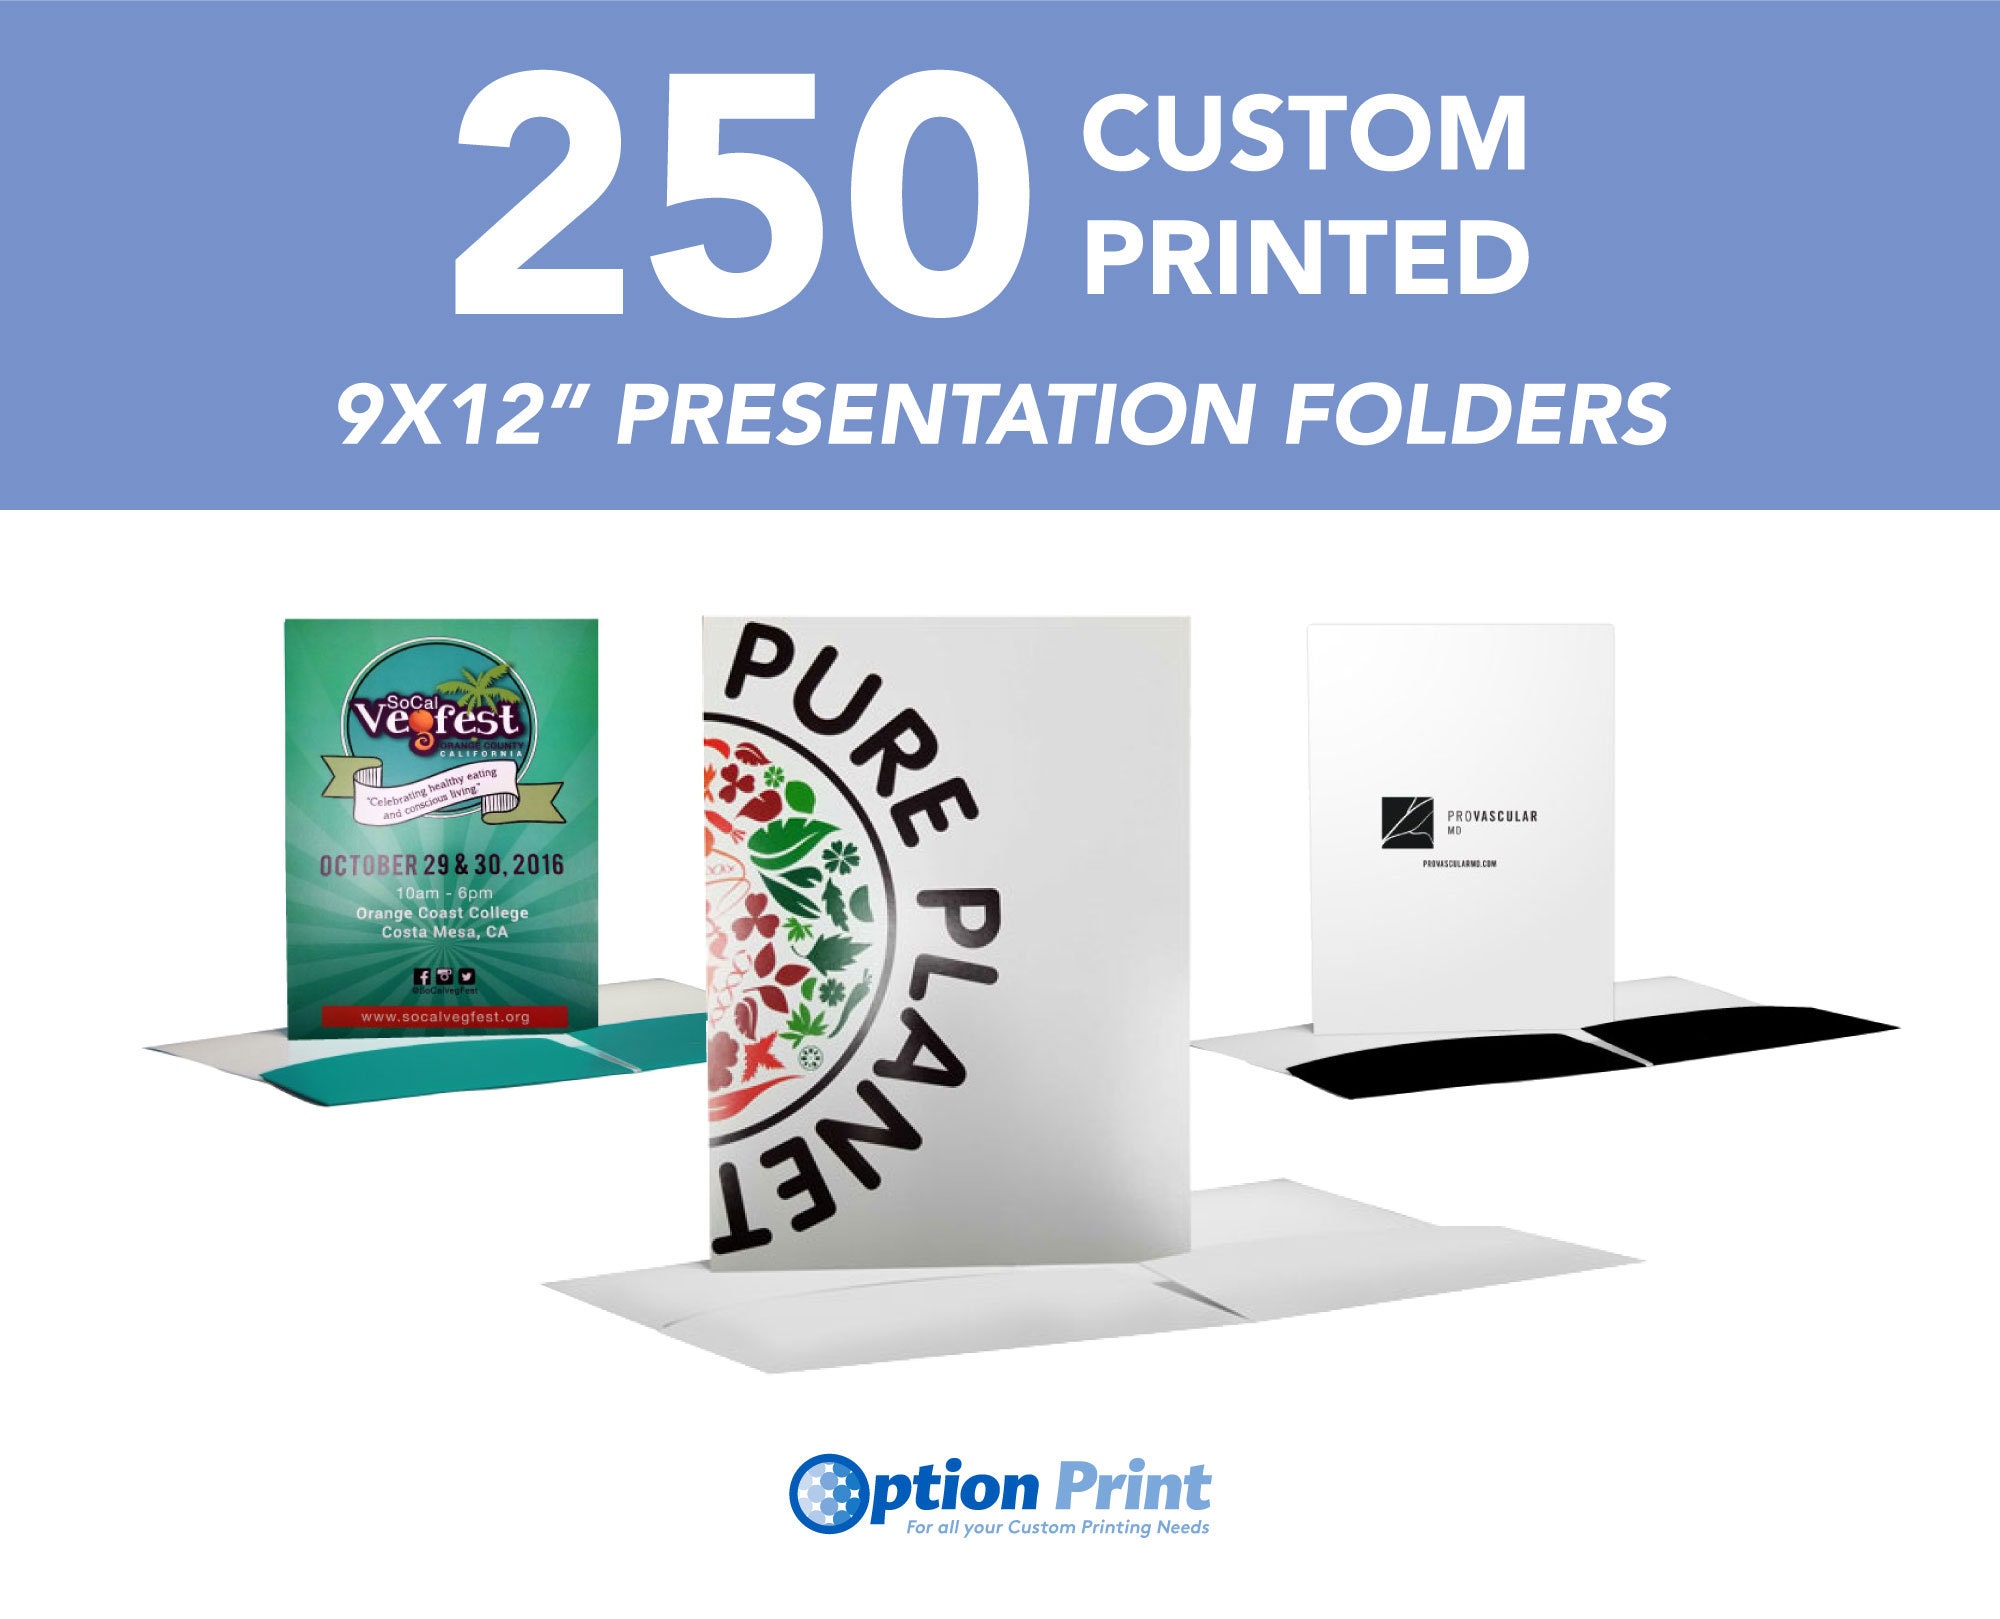 9"x12" Small Quantity Full Color Printed Presentation Folders quantity 250 